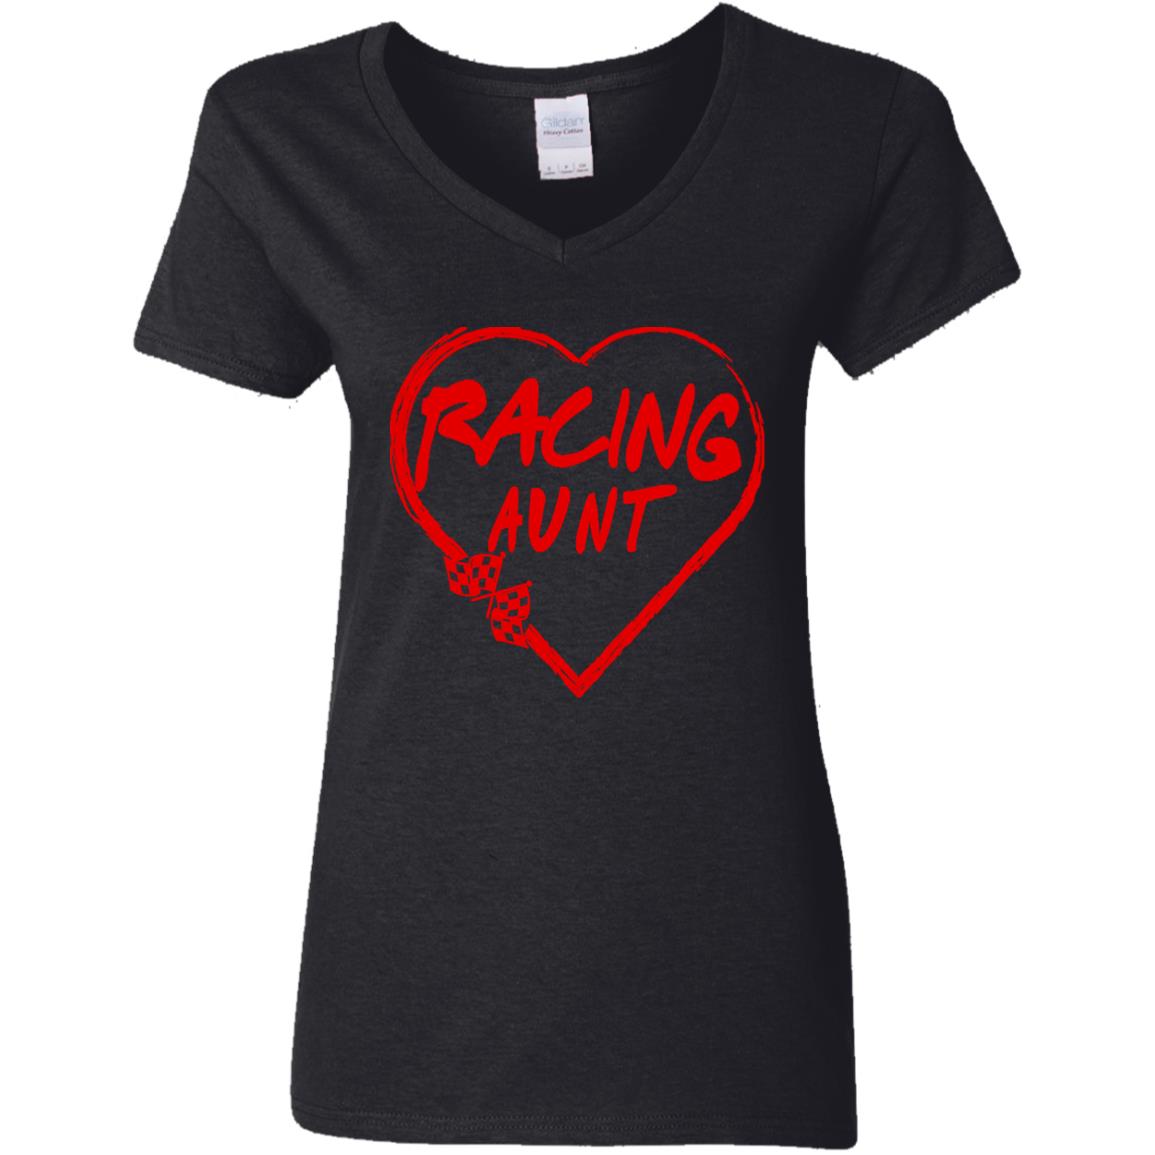 Racing Aunt Heart Ladies' 5.3 oz. V-Neck T-Shirt